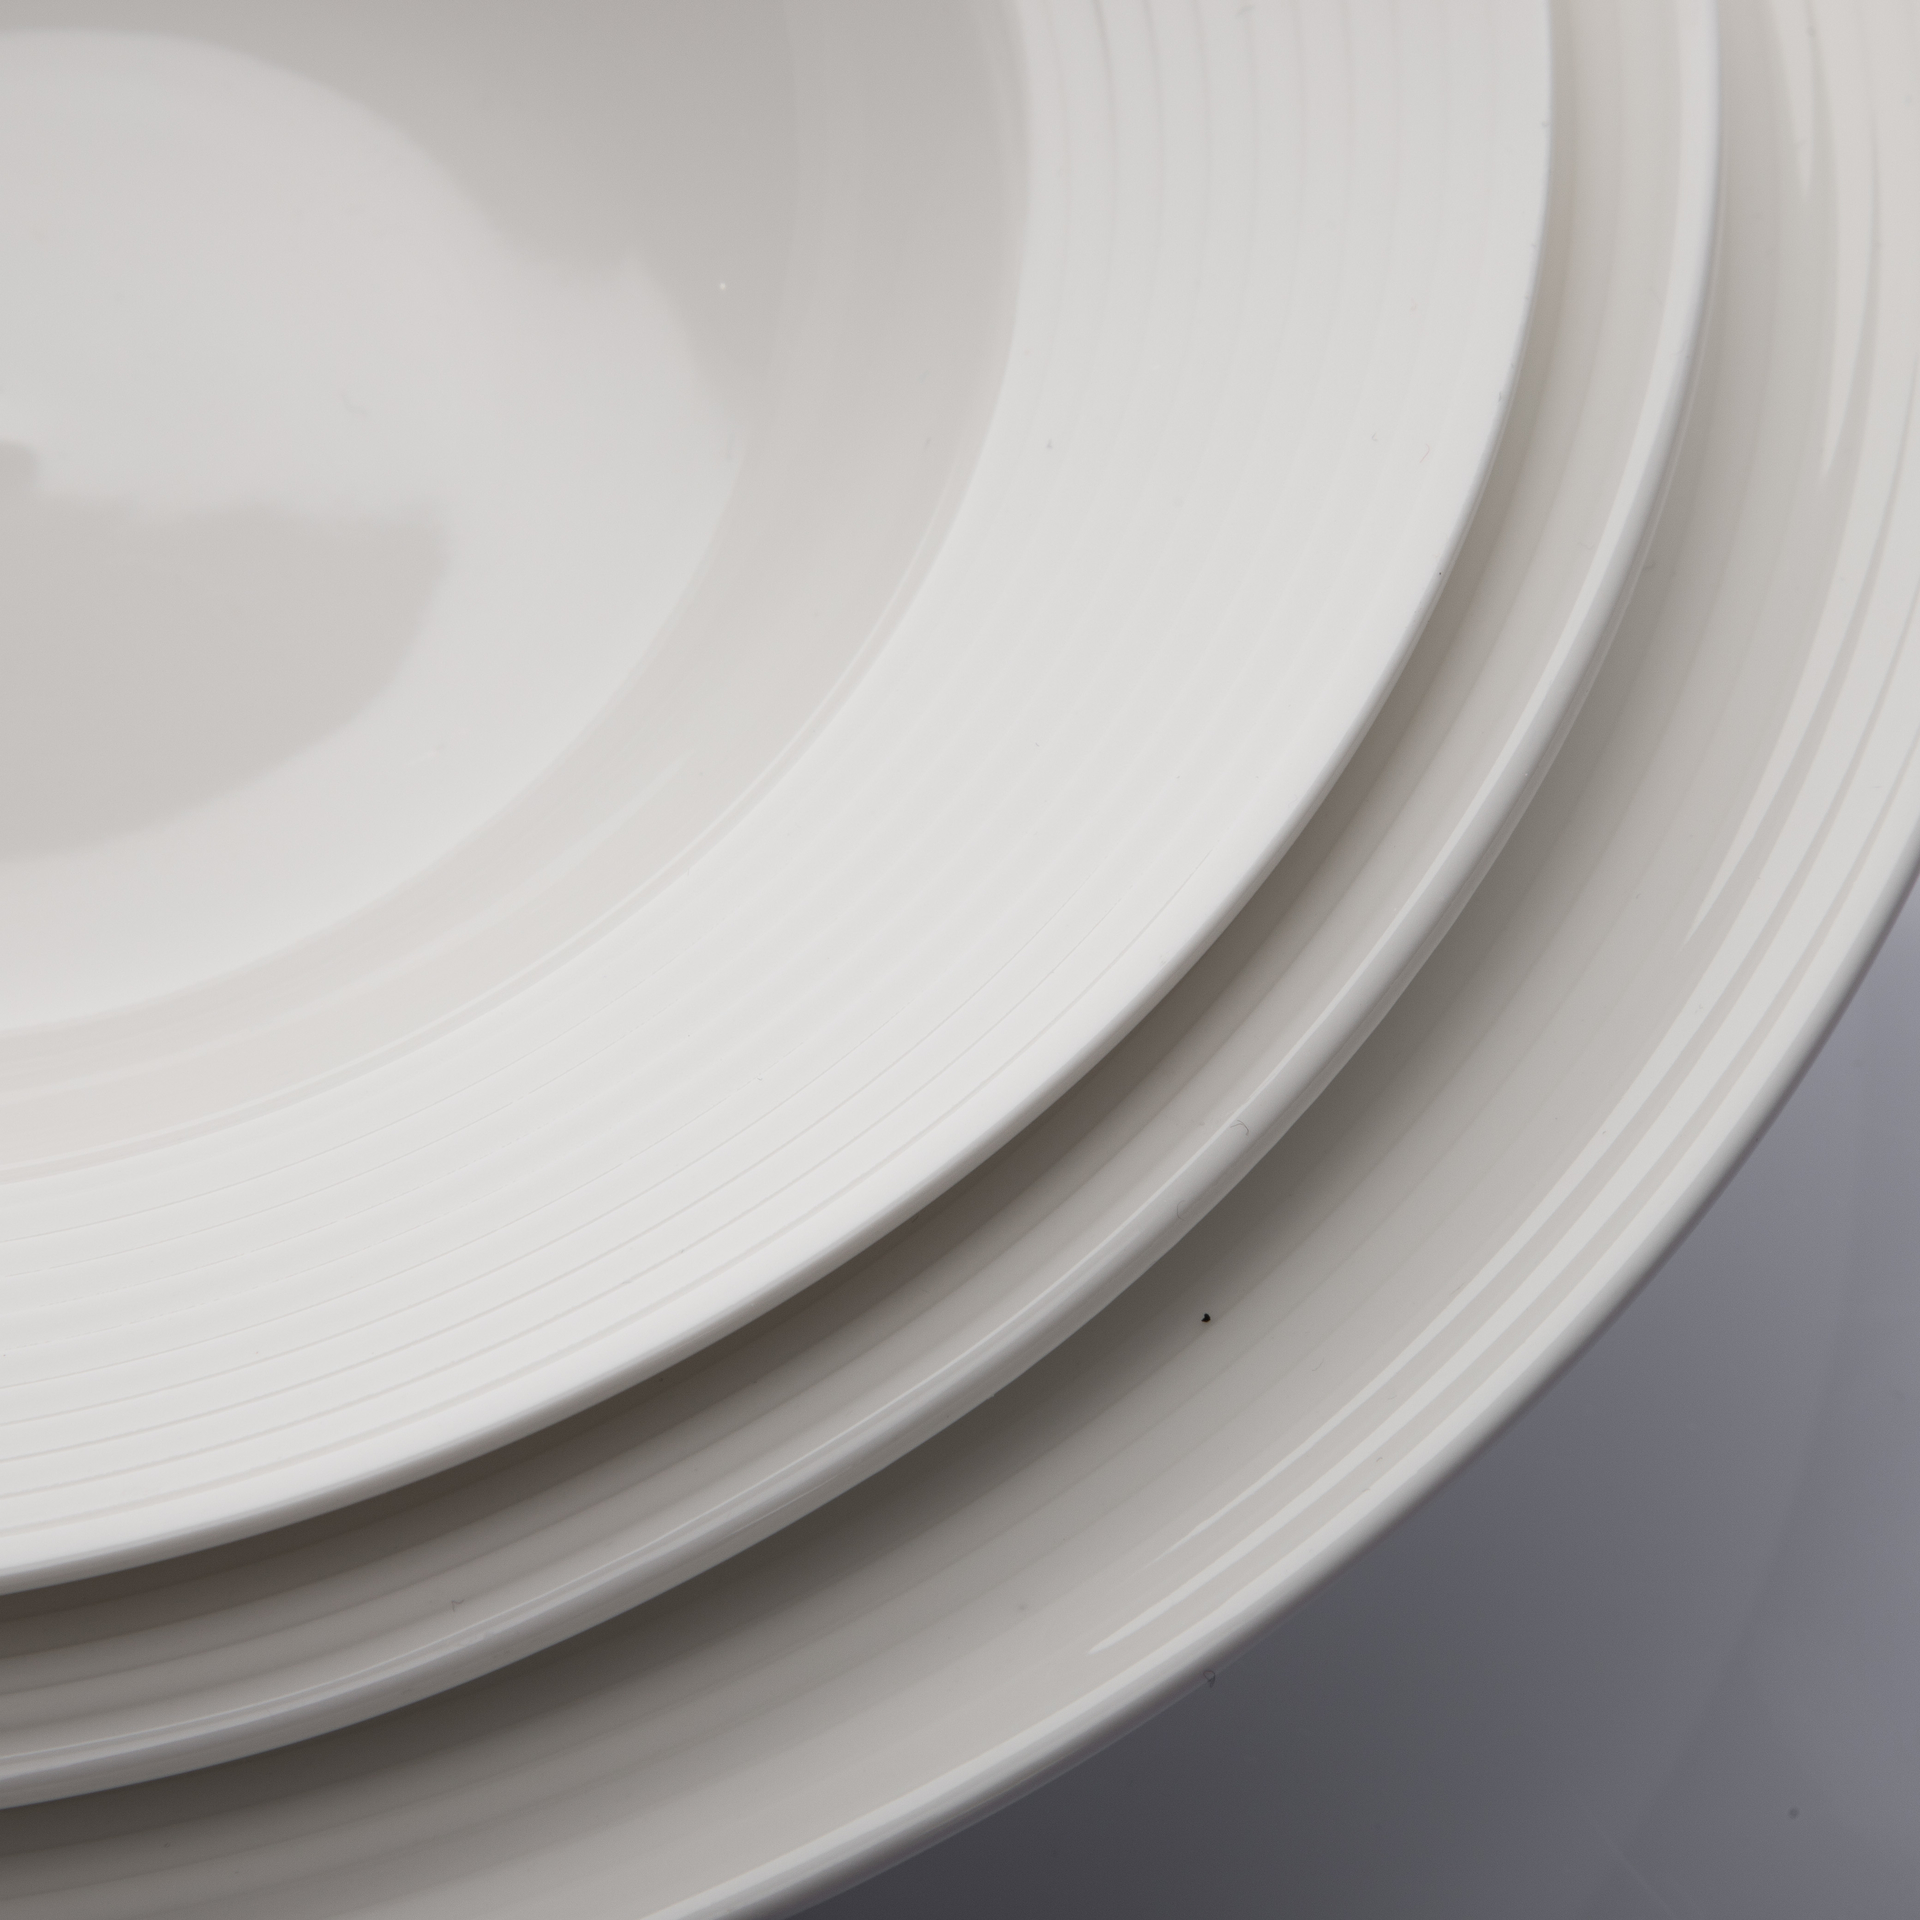 Best Selling Vajilla Salad Plate Chaozhou Factory Banquet Restaurant Plates, Moden Crockery Assiette Porcelaine Pasta Plate&